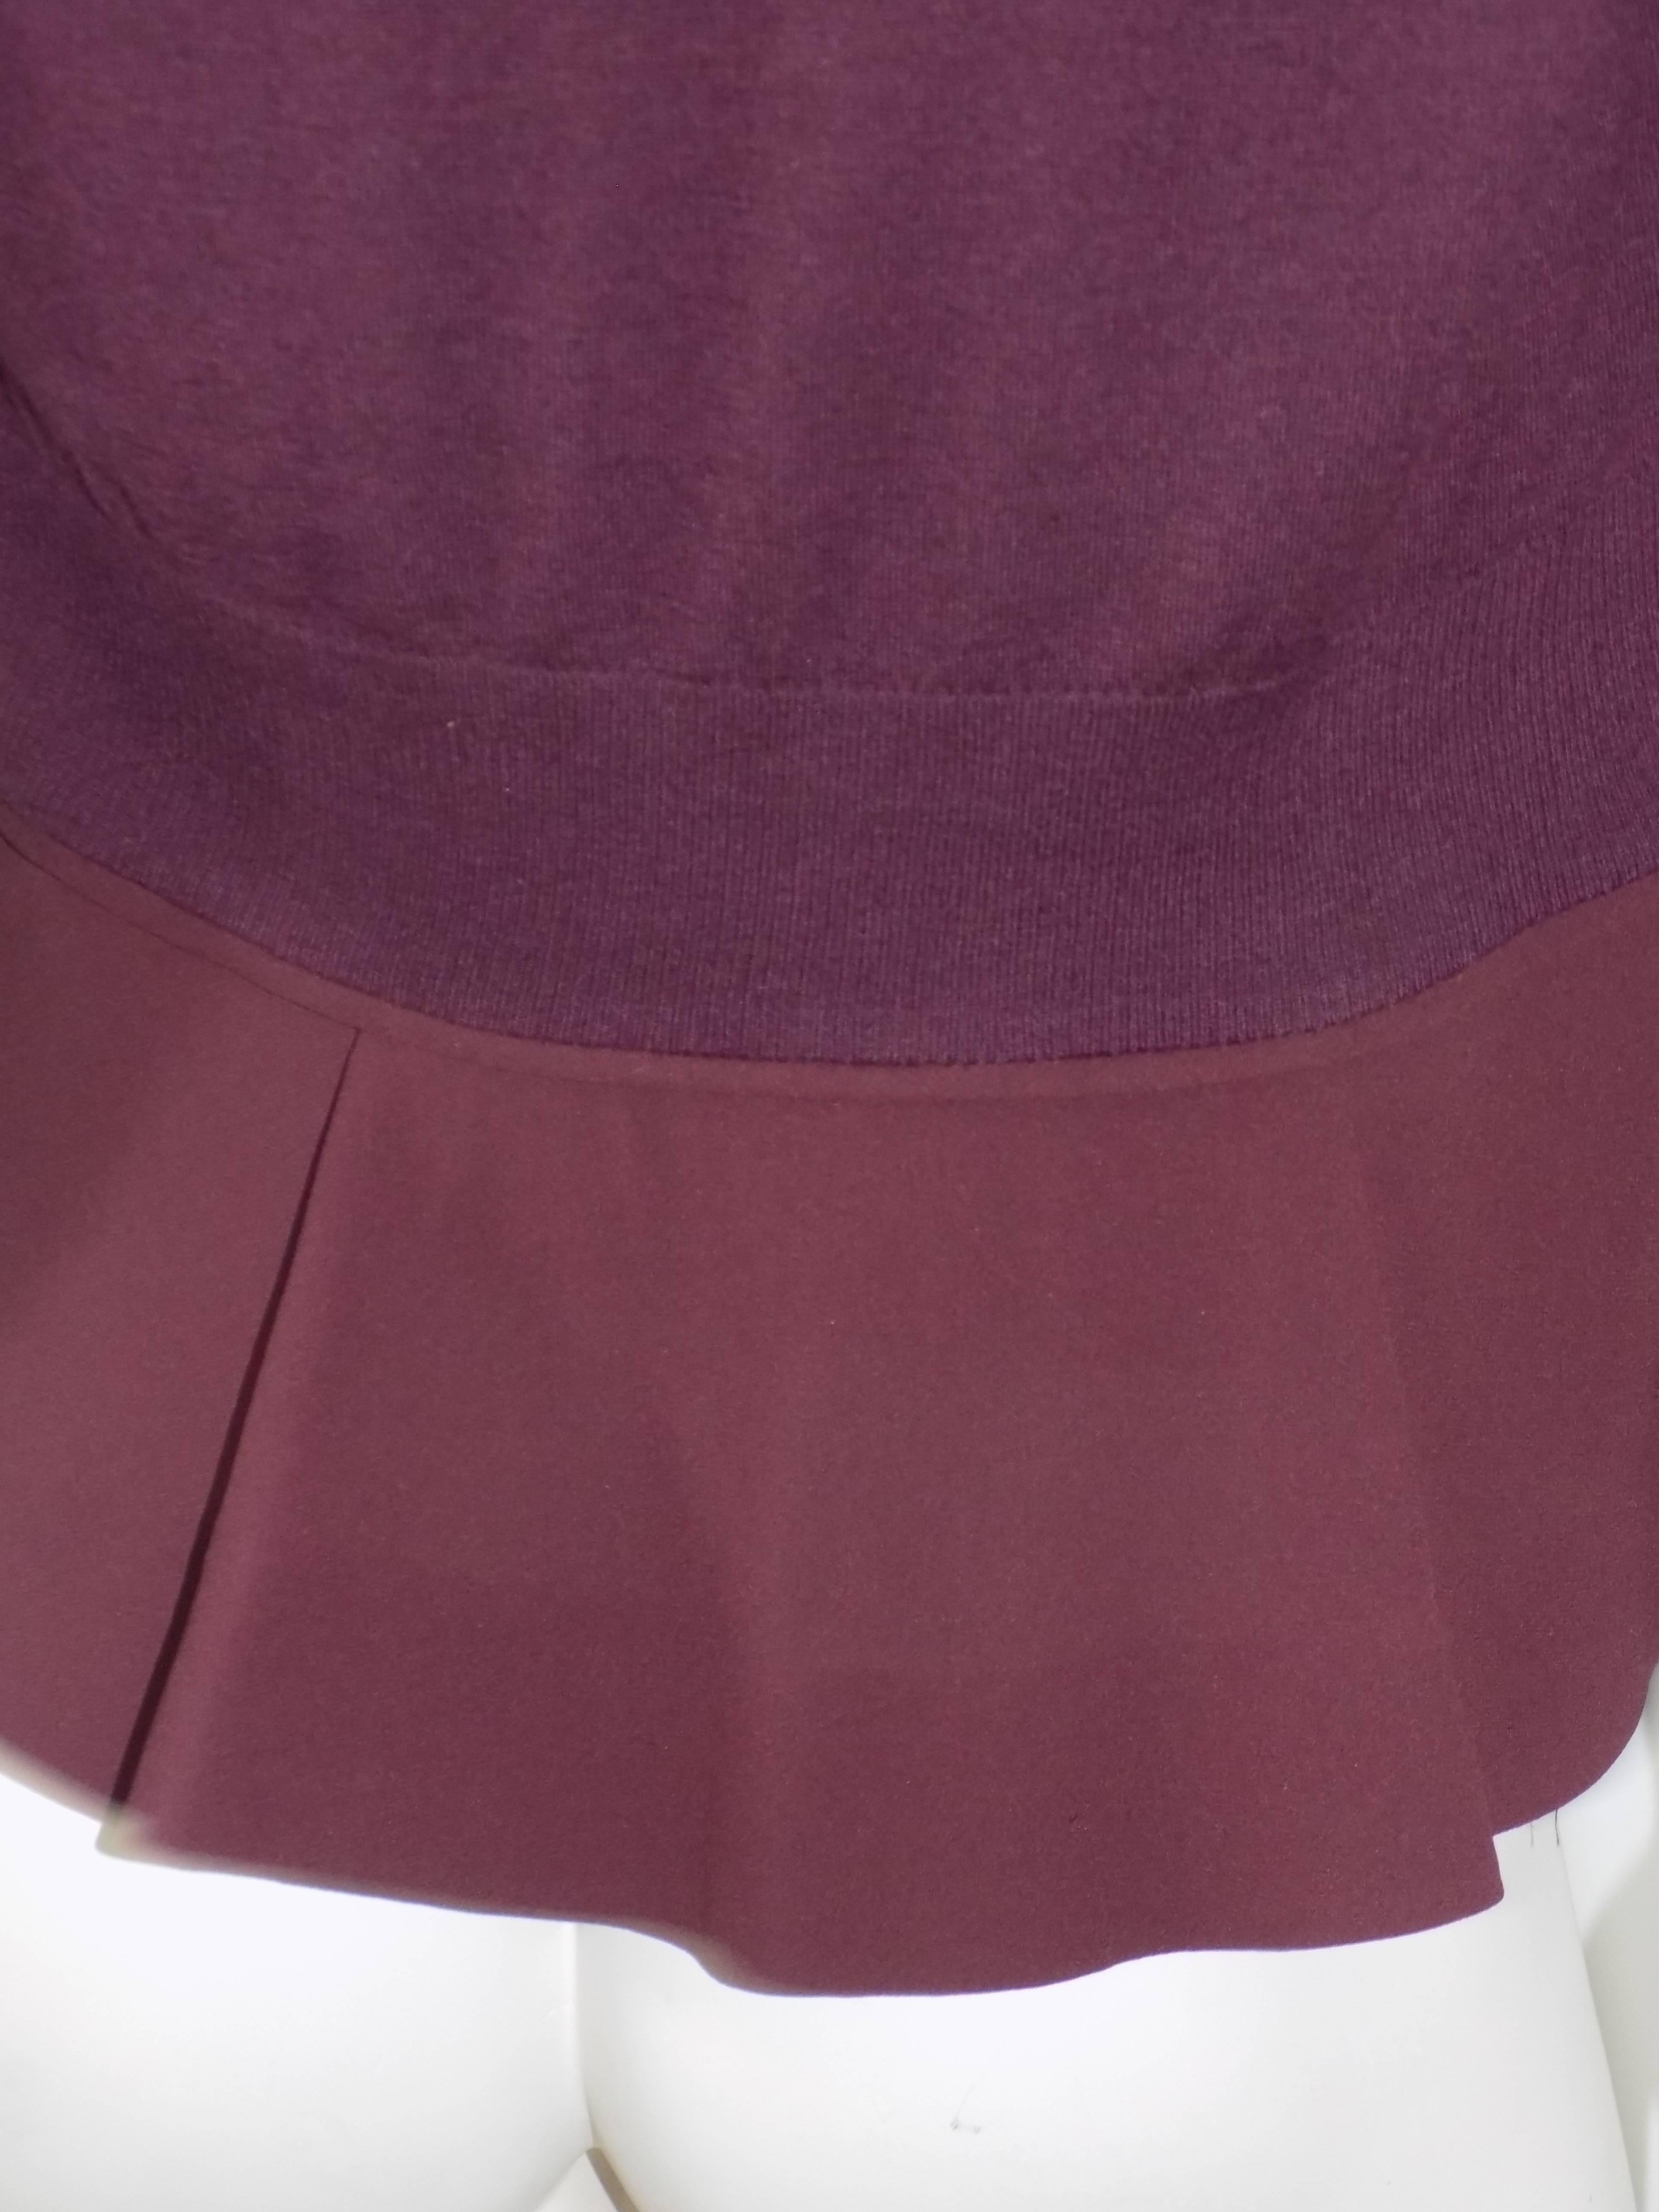 Women's Nina Ricci silk and cashmere sweater set jaket/ top                           